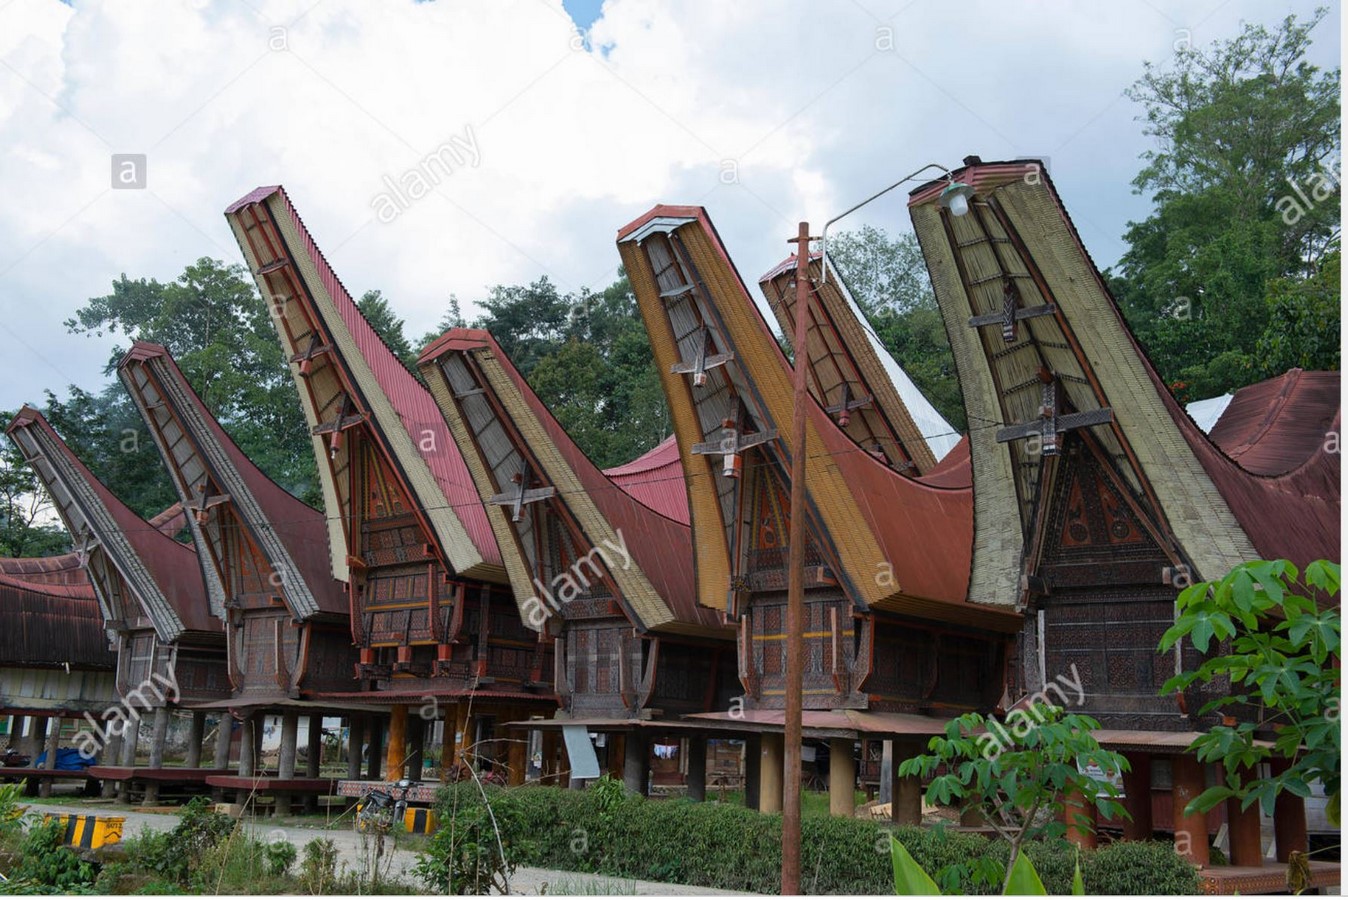 An overview of Toraja Houses - Sheet1